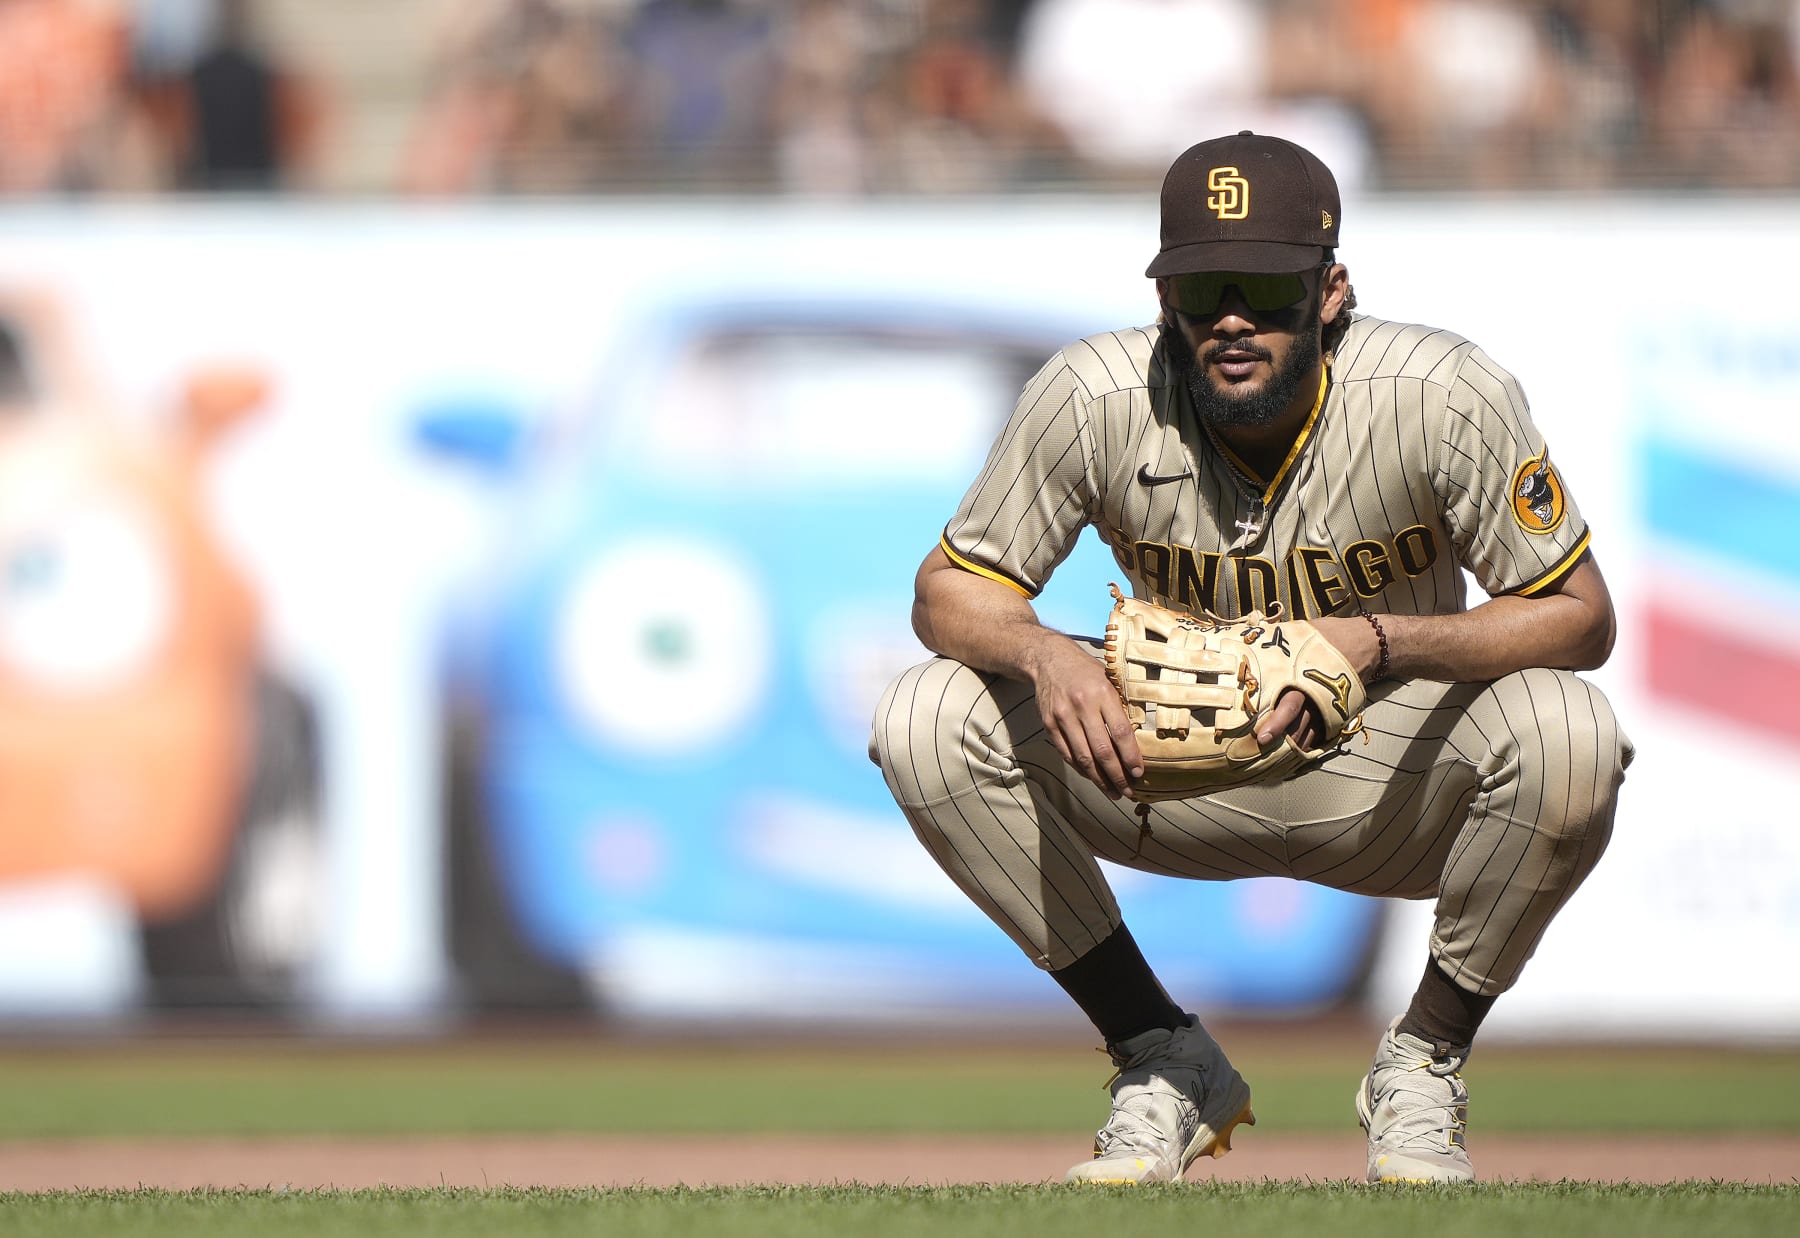 MLB preview: Pirates, Rockies look like baseball's worst teams